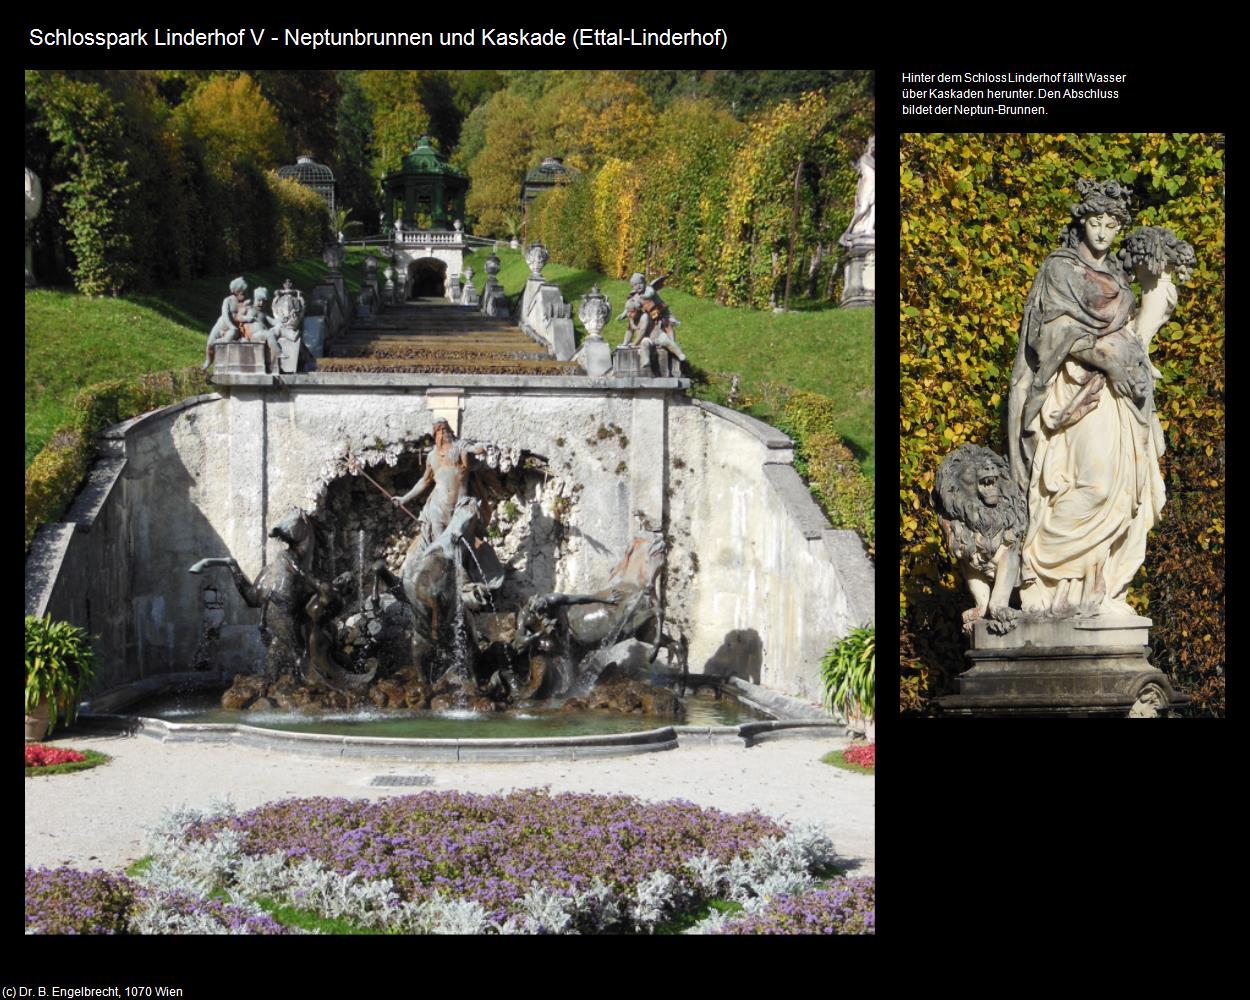 Neptunbrunnen und Kaskade (Linderhof) (Ettal-Linderhof ) in Kulturatlas-BAYERN